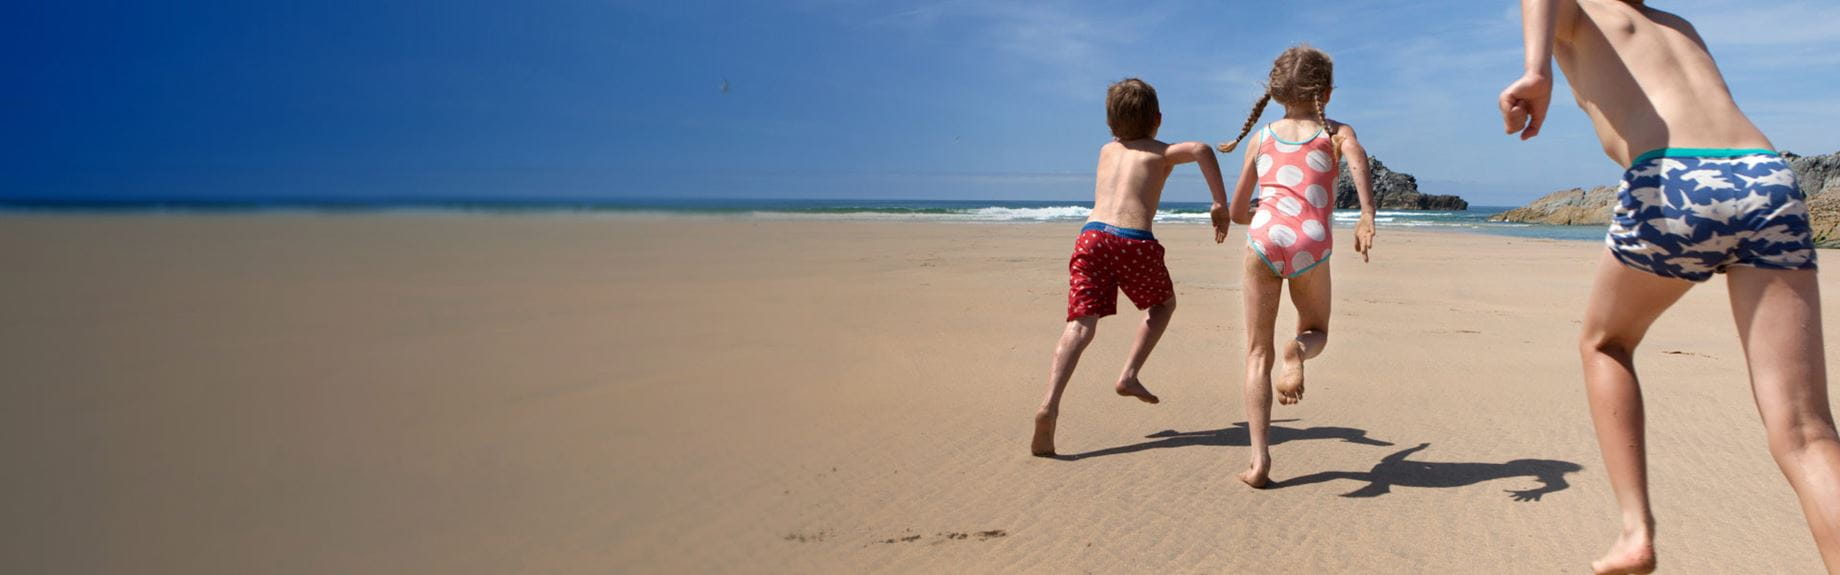 Kids running on beach